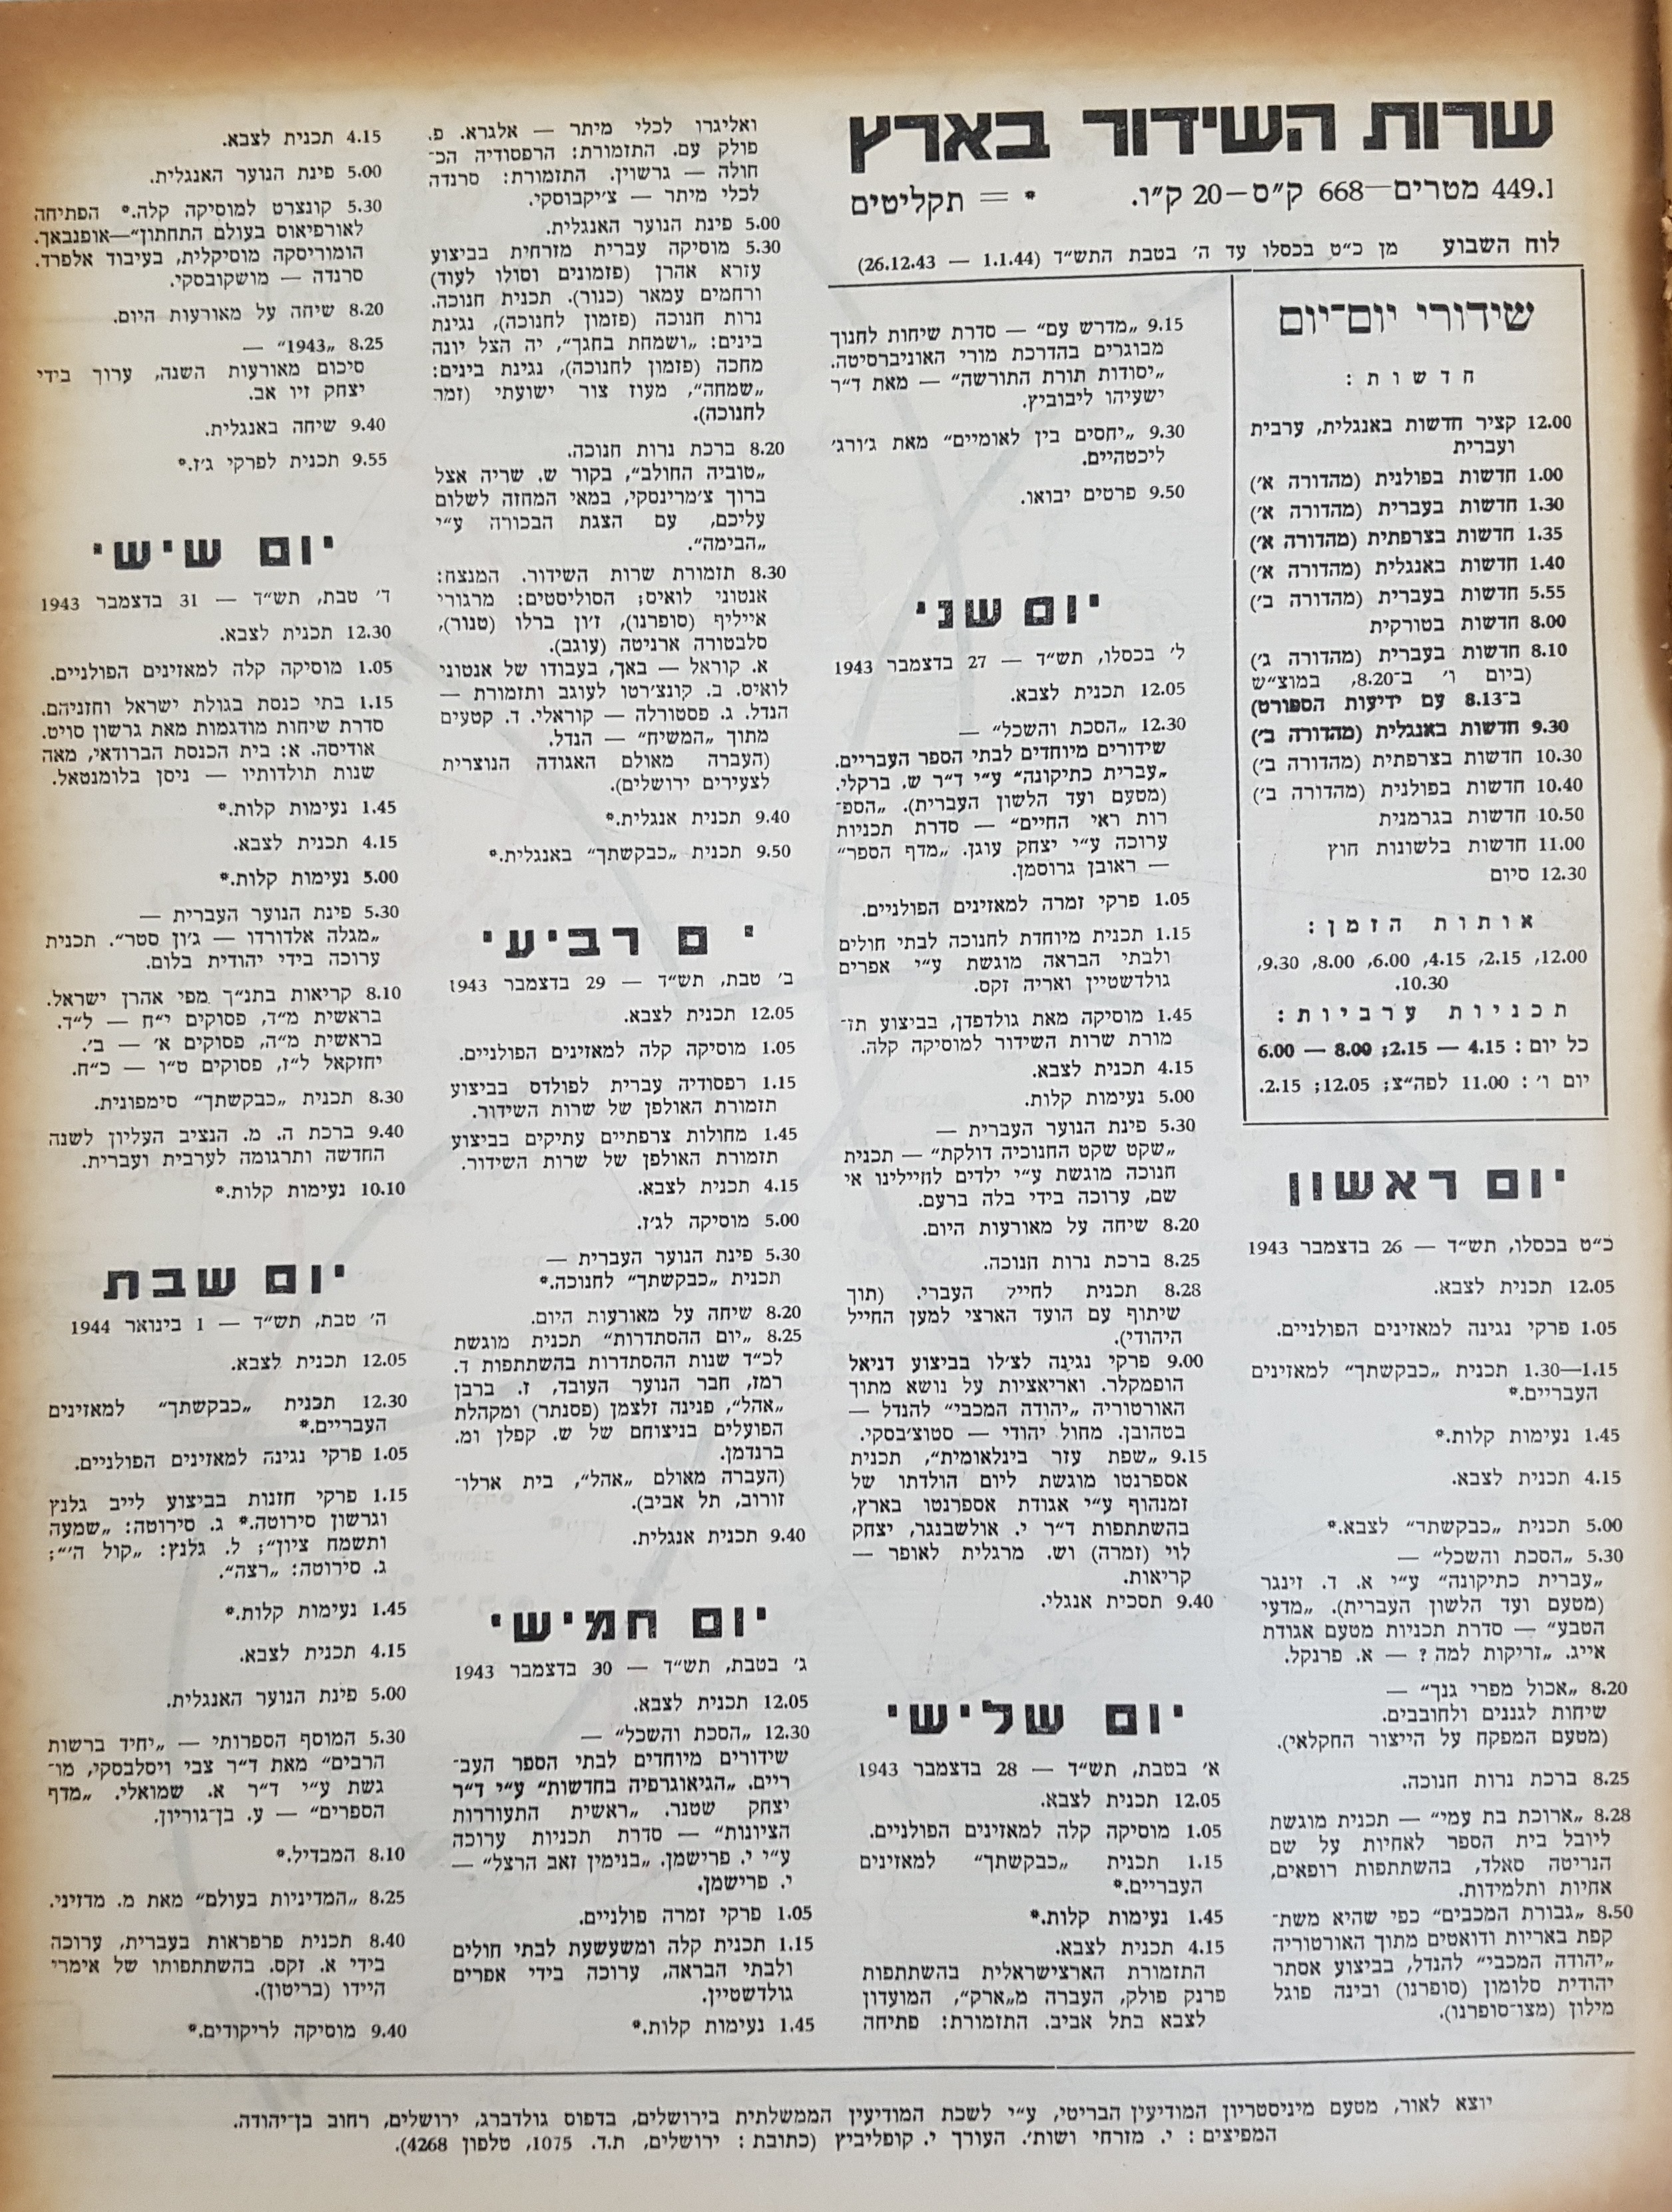 Radio Schedule: December 26, 1943 -  January 1, 1944